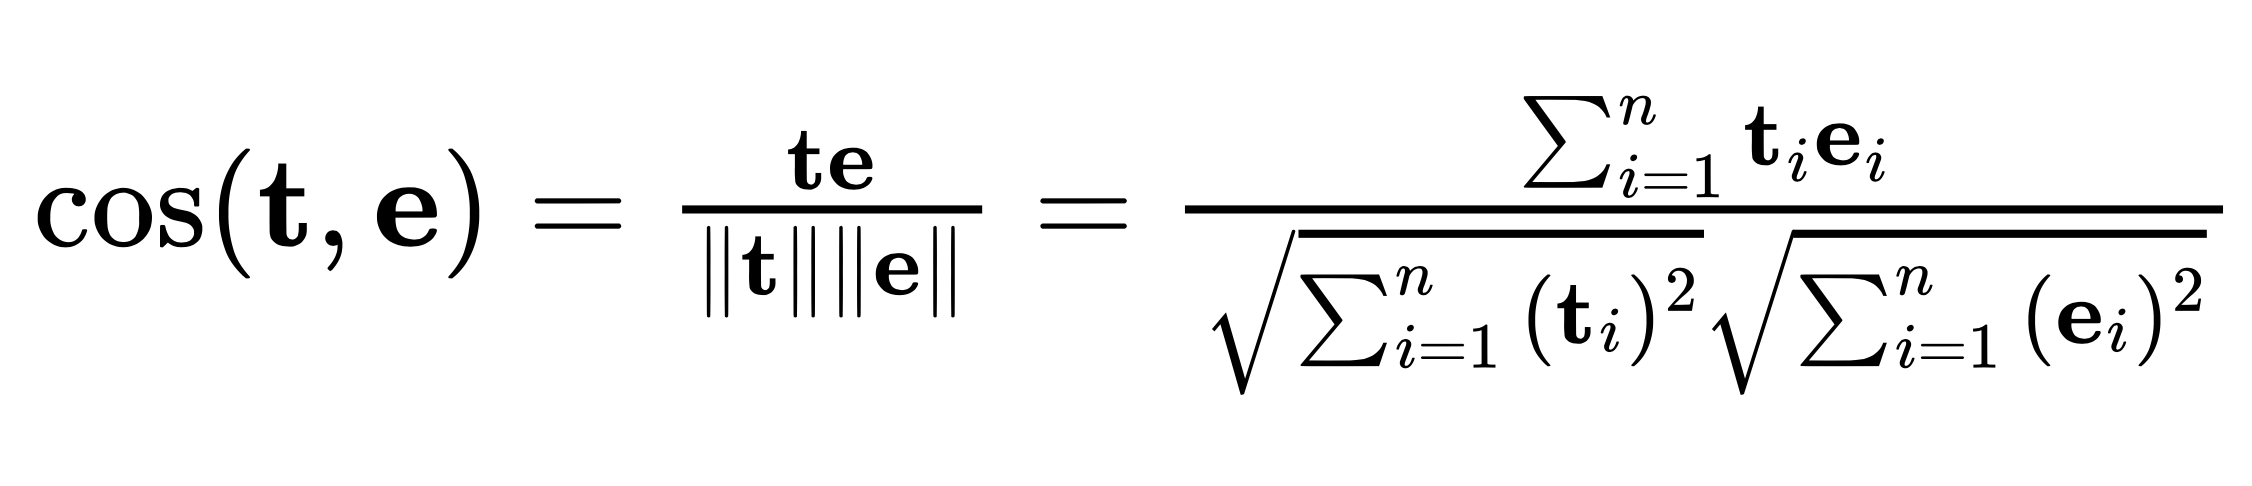 Formula for Cosine Similarity